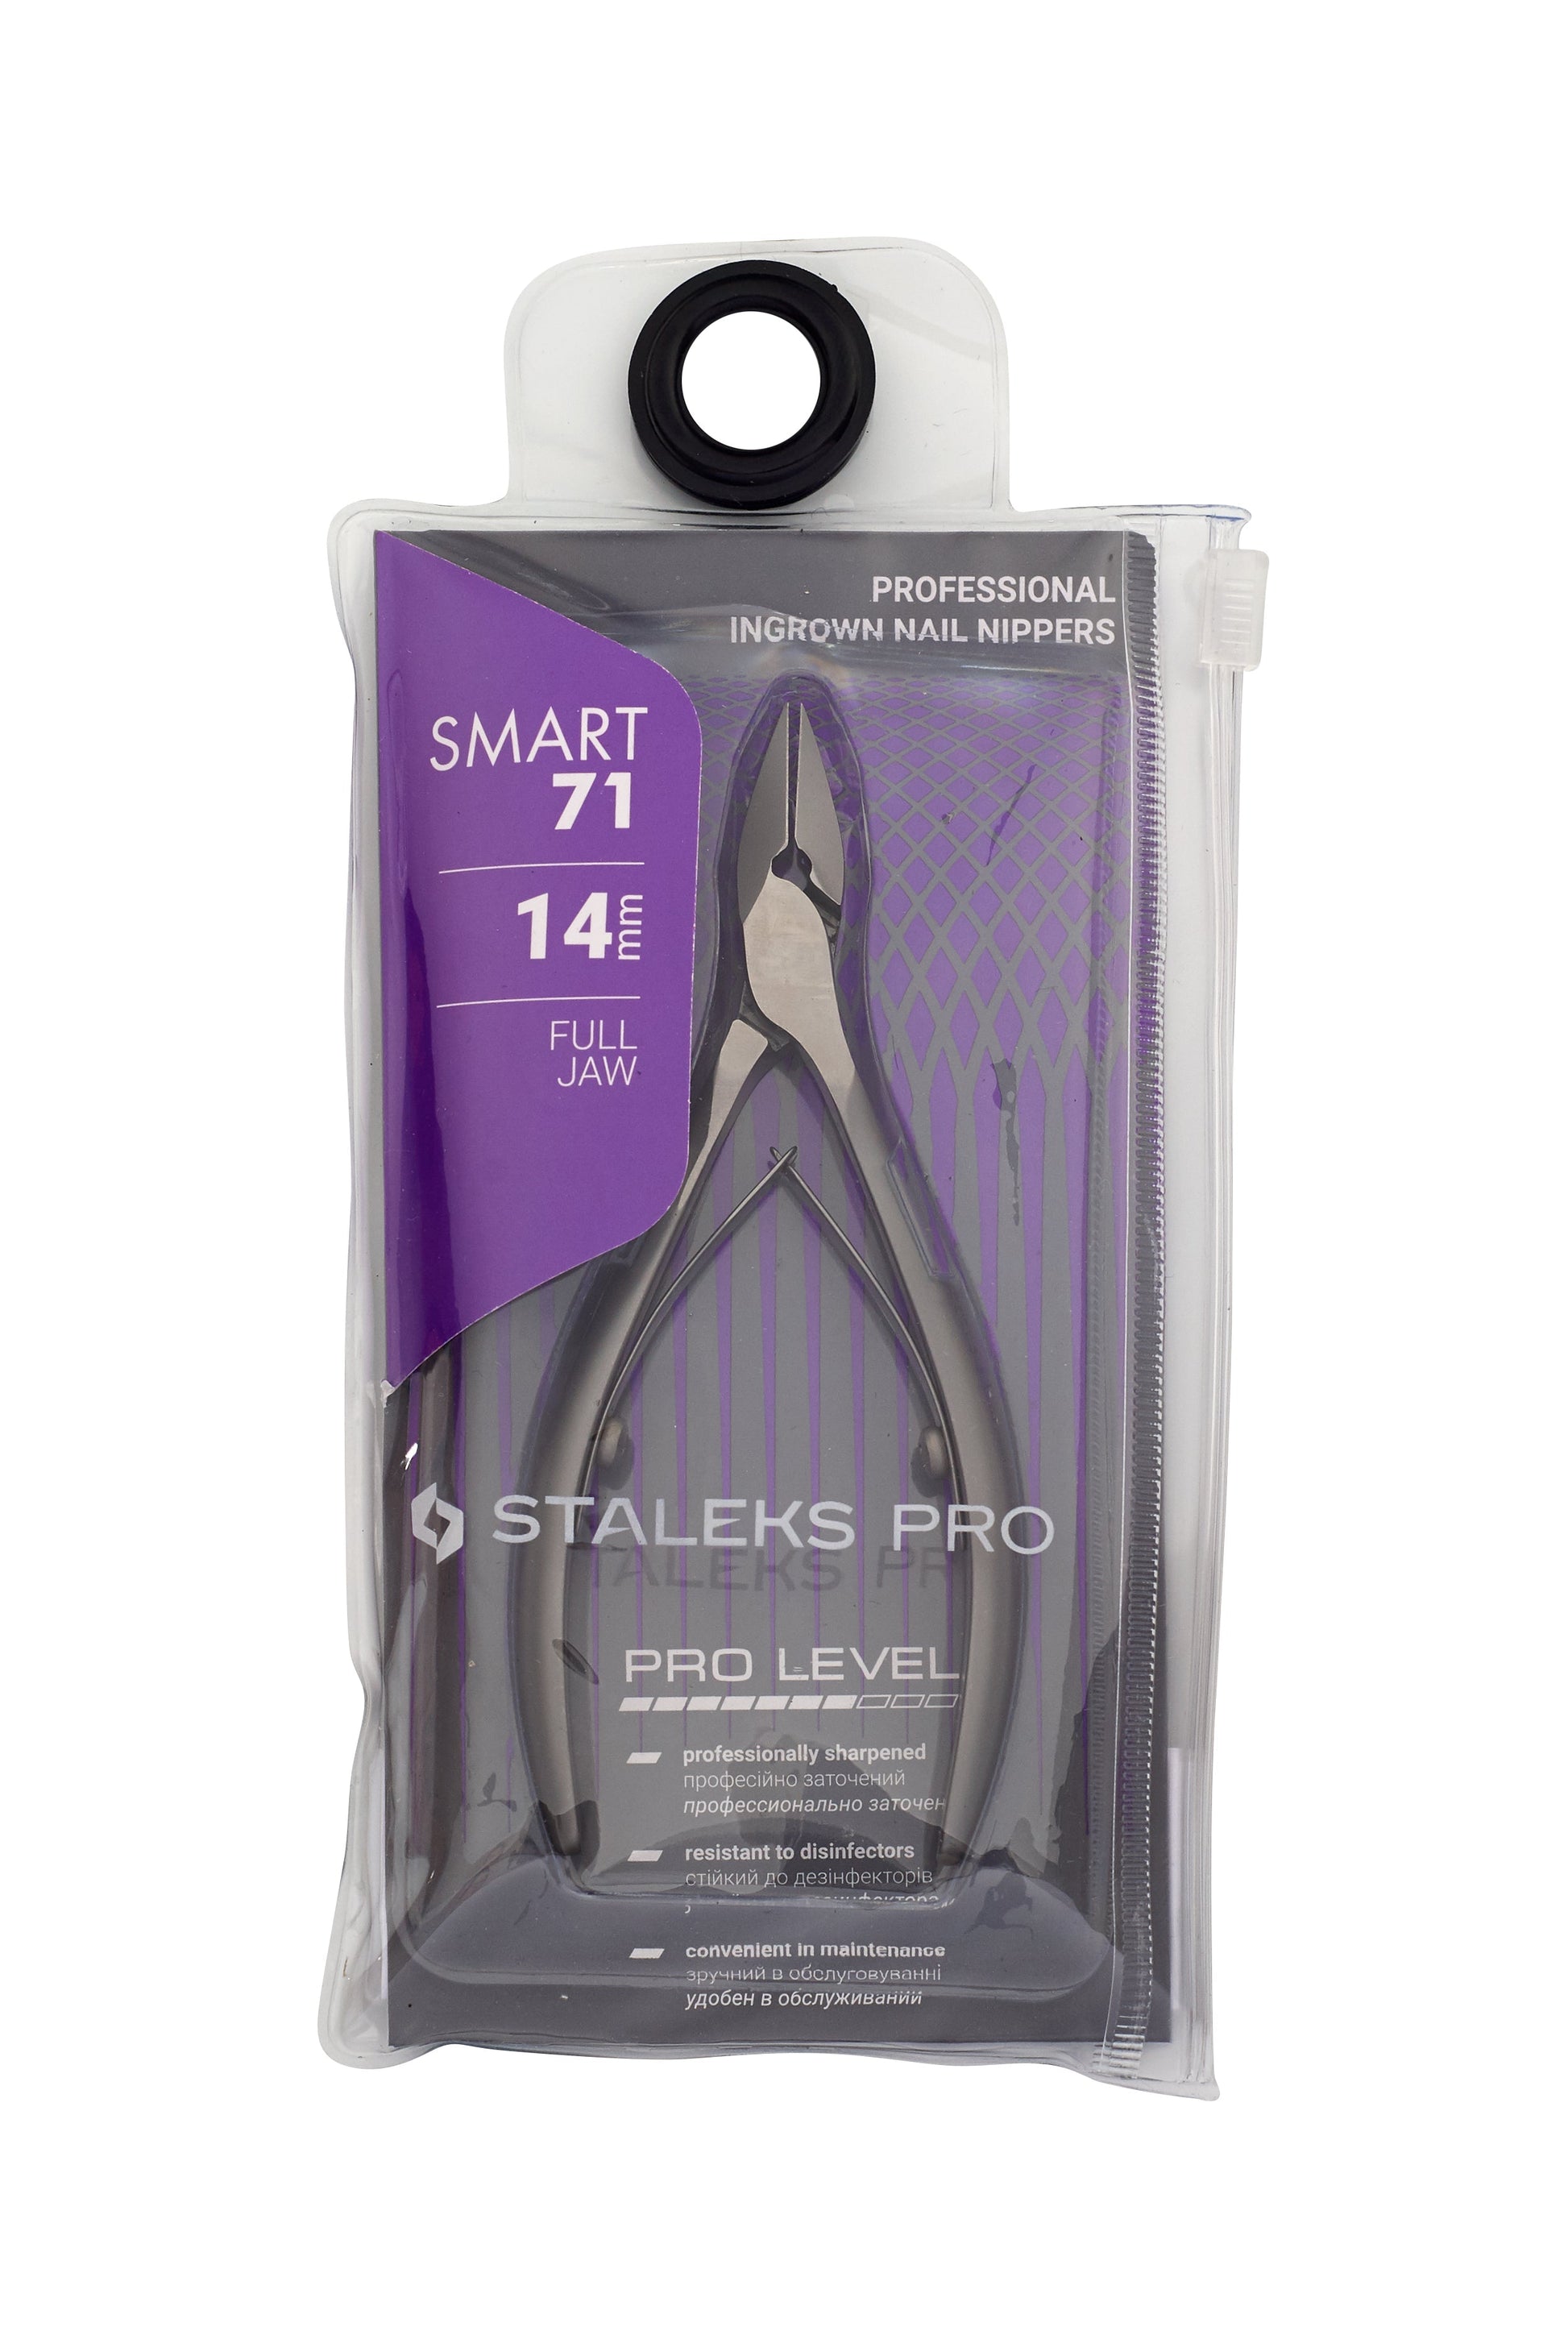 STALEKS-Ingrown nail nippers SMART 71 14 mm Professional-5